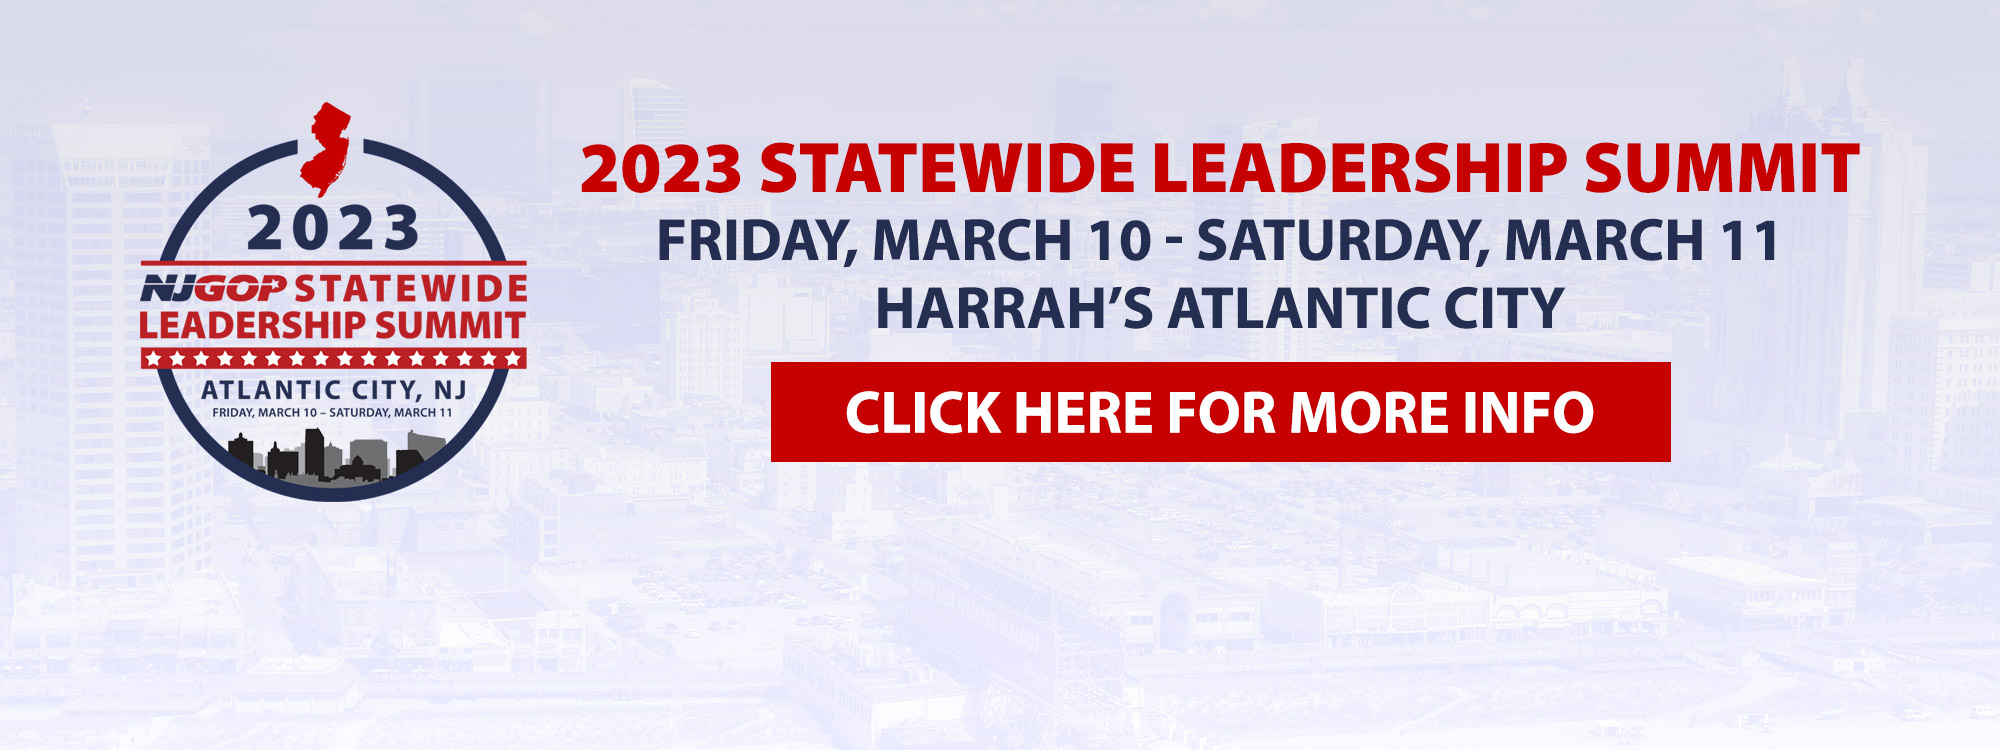 2023 Statewide Leadership Summit